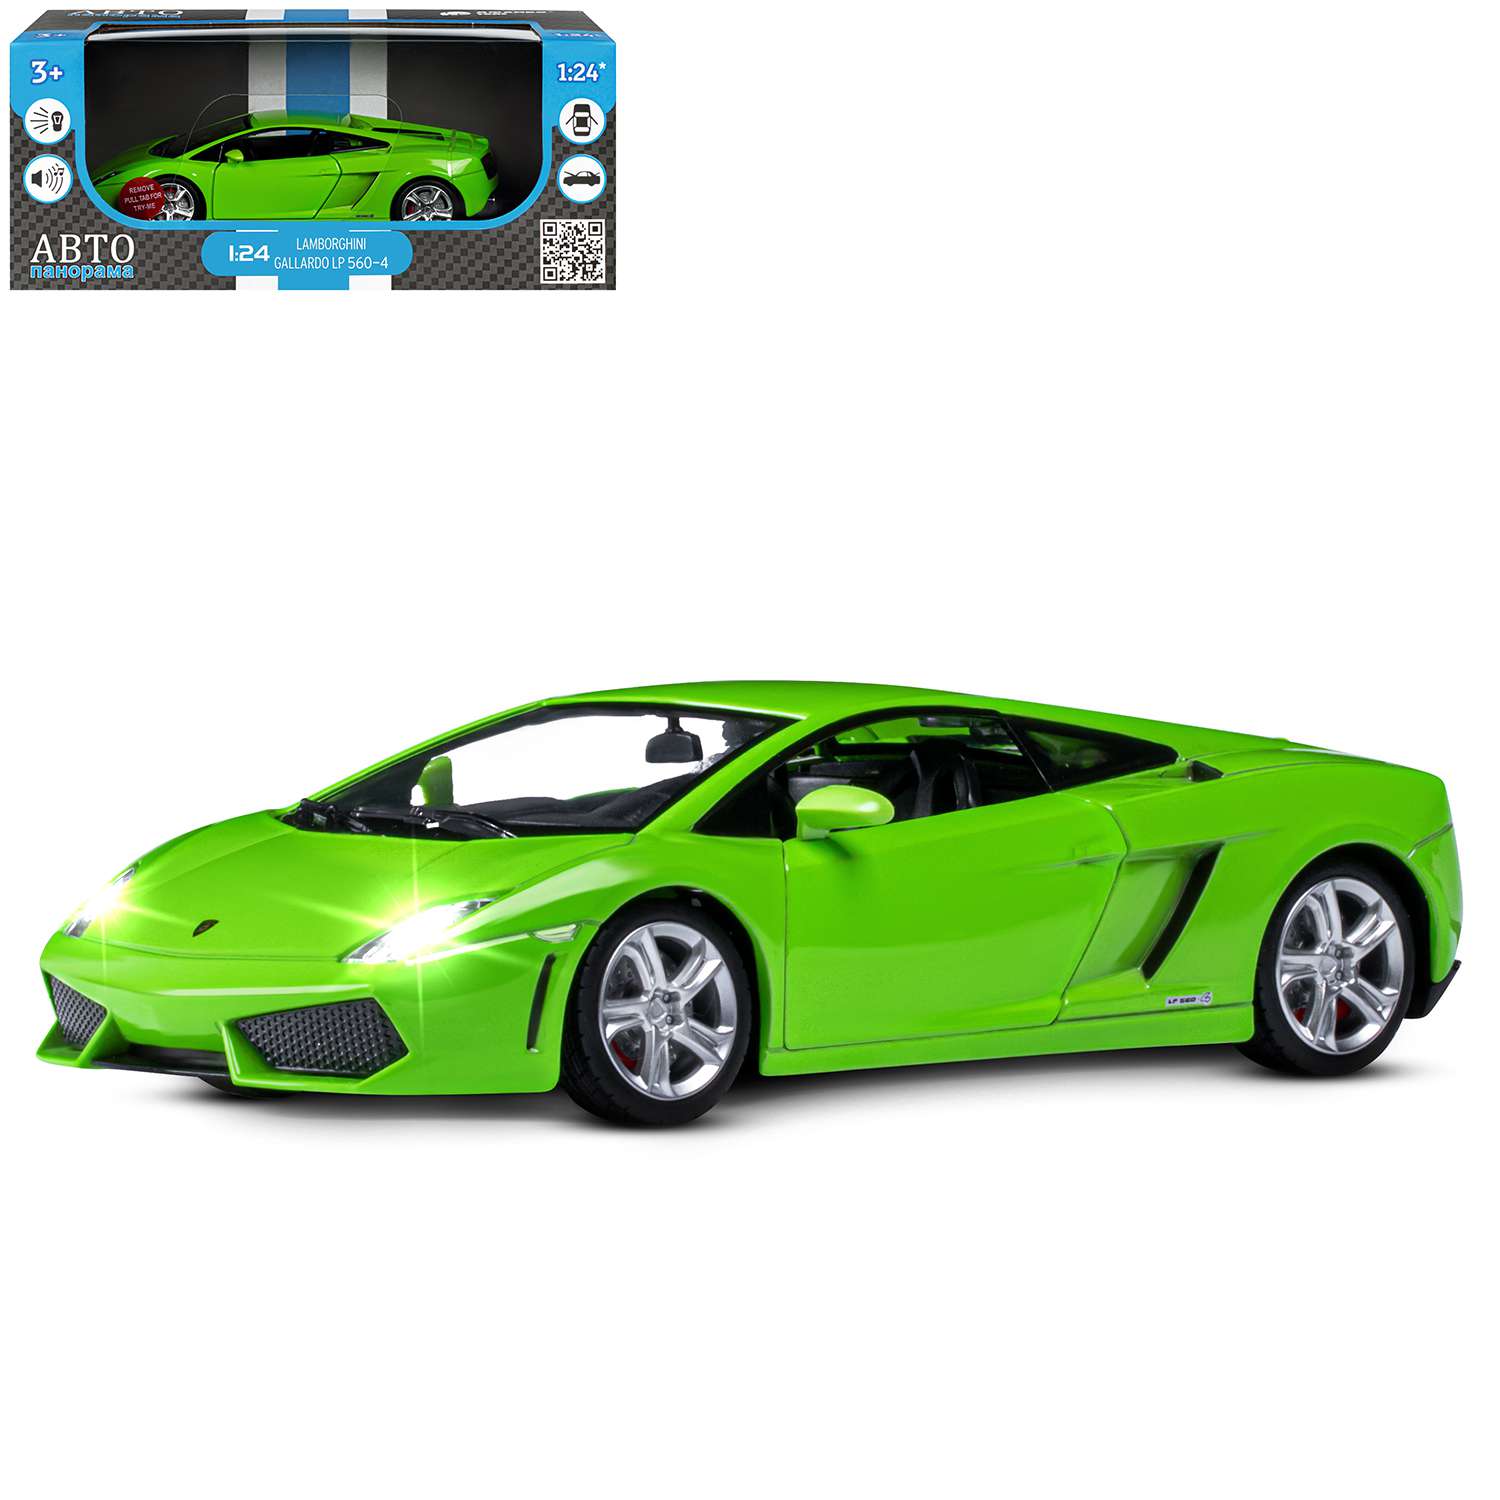 Машина JB1251382 Lamborghini Gallardo LP560-4 металл 1:24 зеленый свет, звук ТМ Автопанорама - Чебоксары 